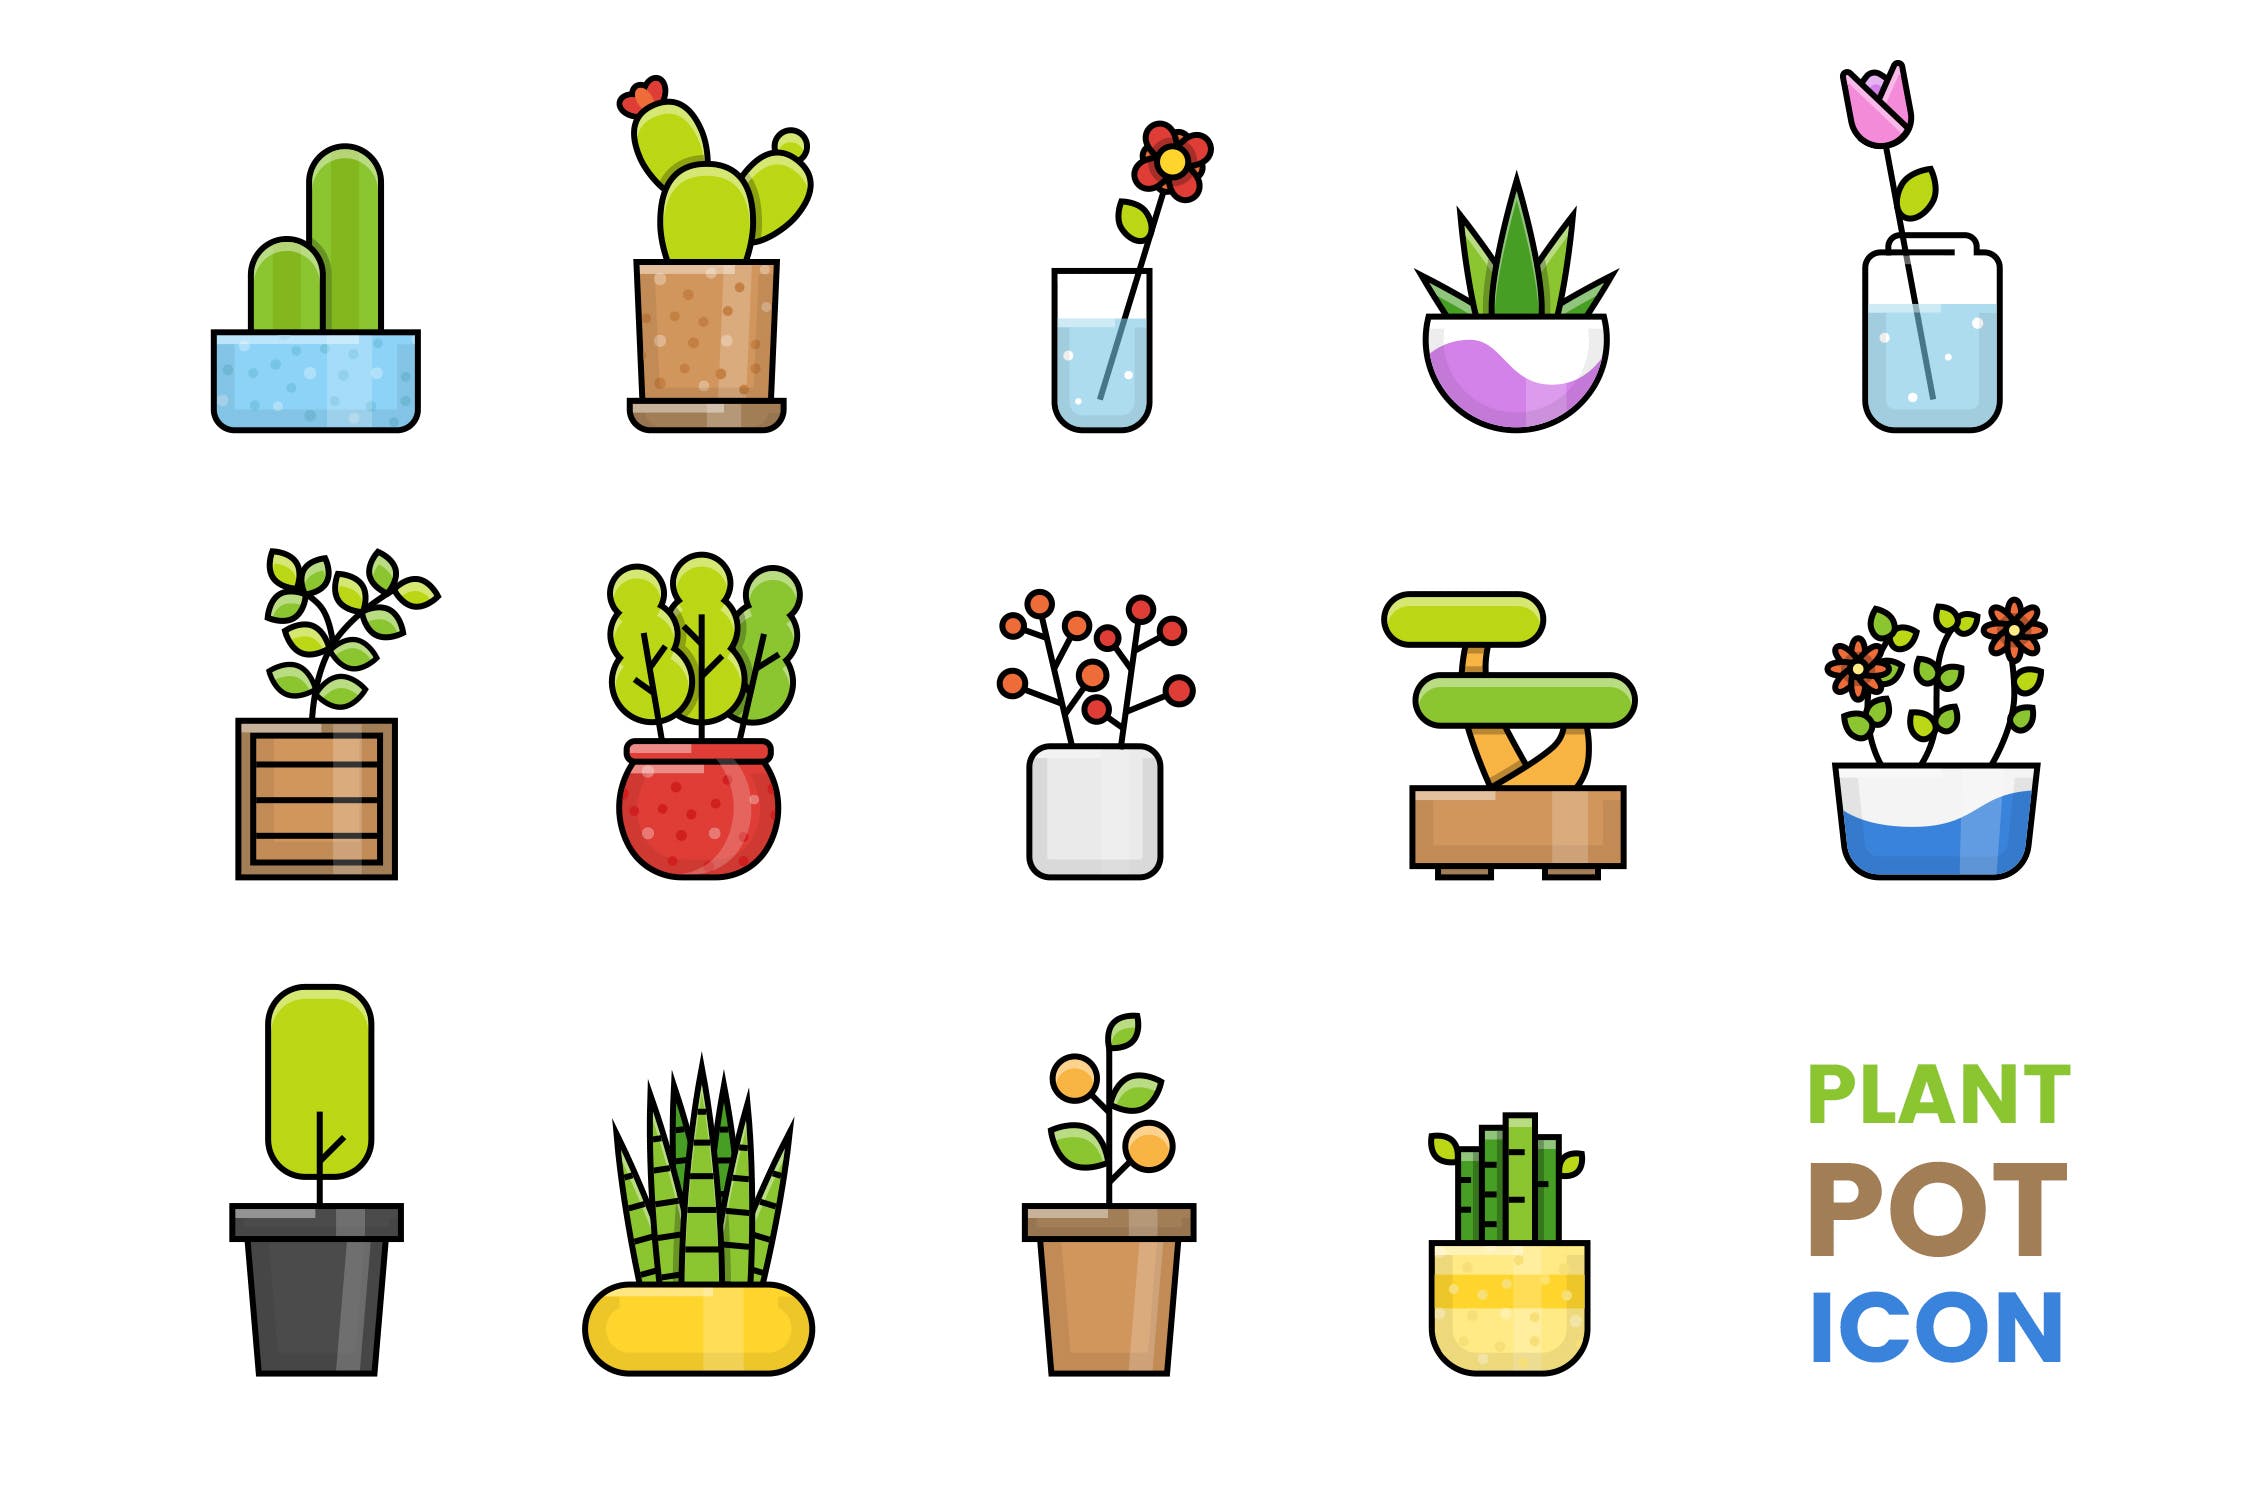 植物盆栽彩色矢量图标素材 Plant Pot Icon插图